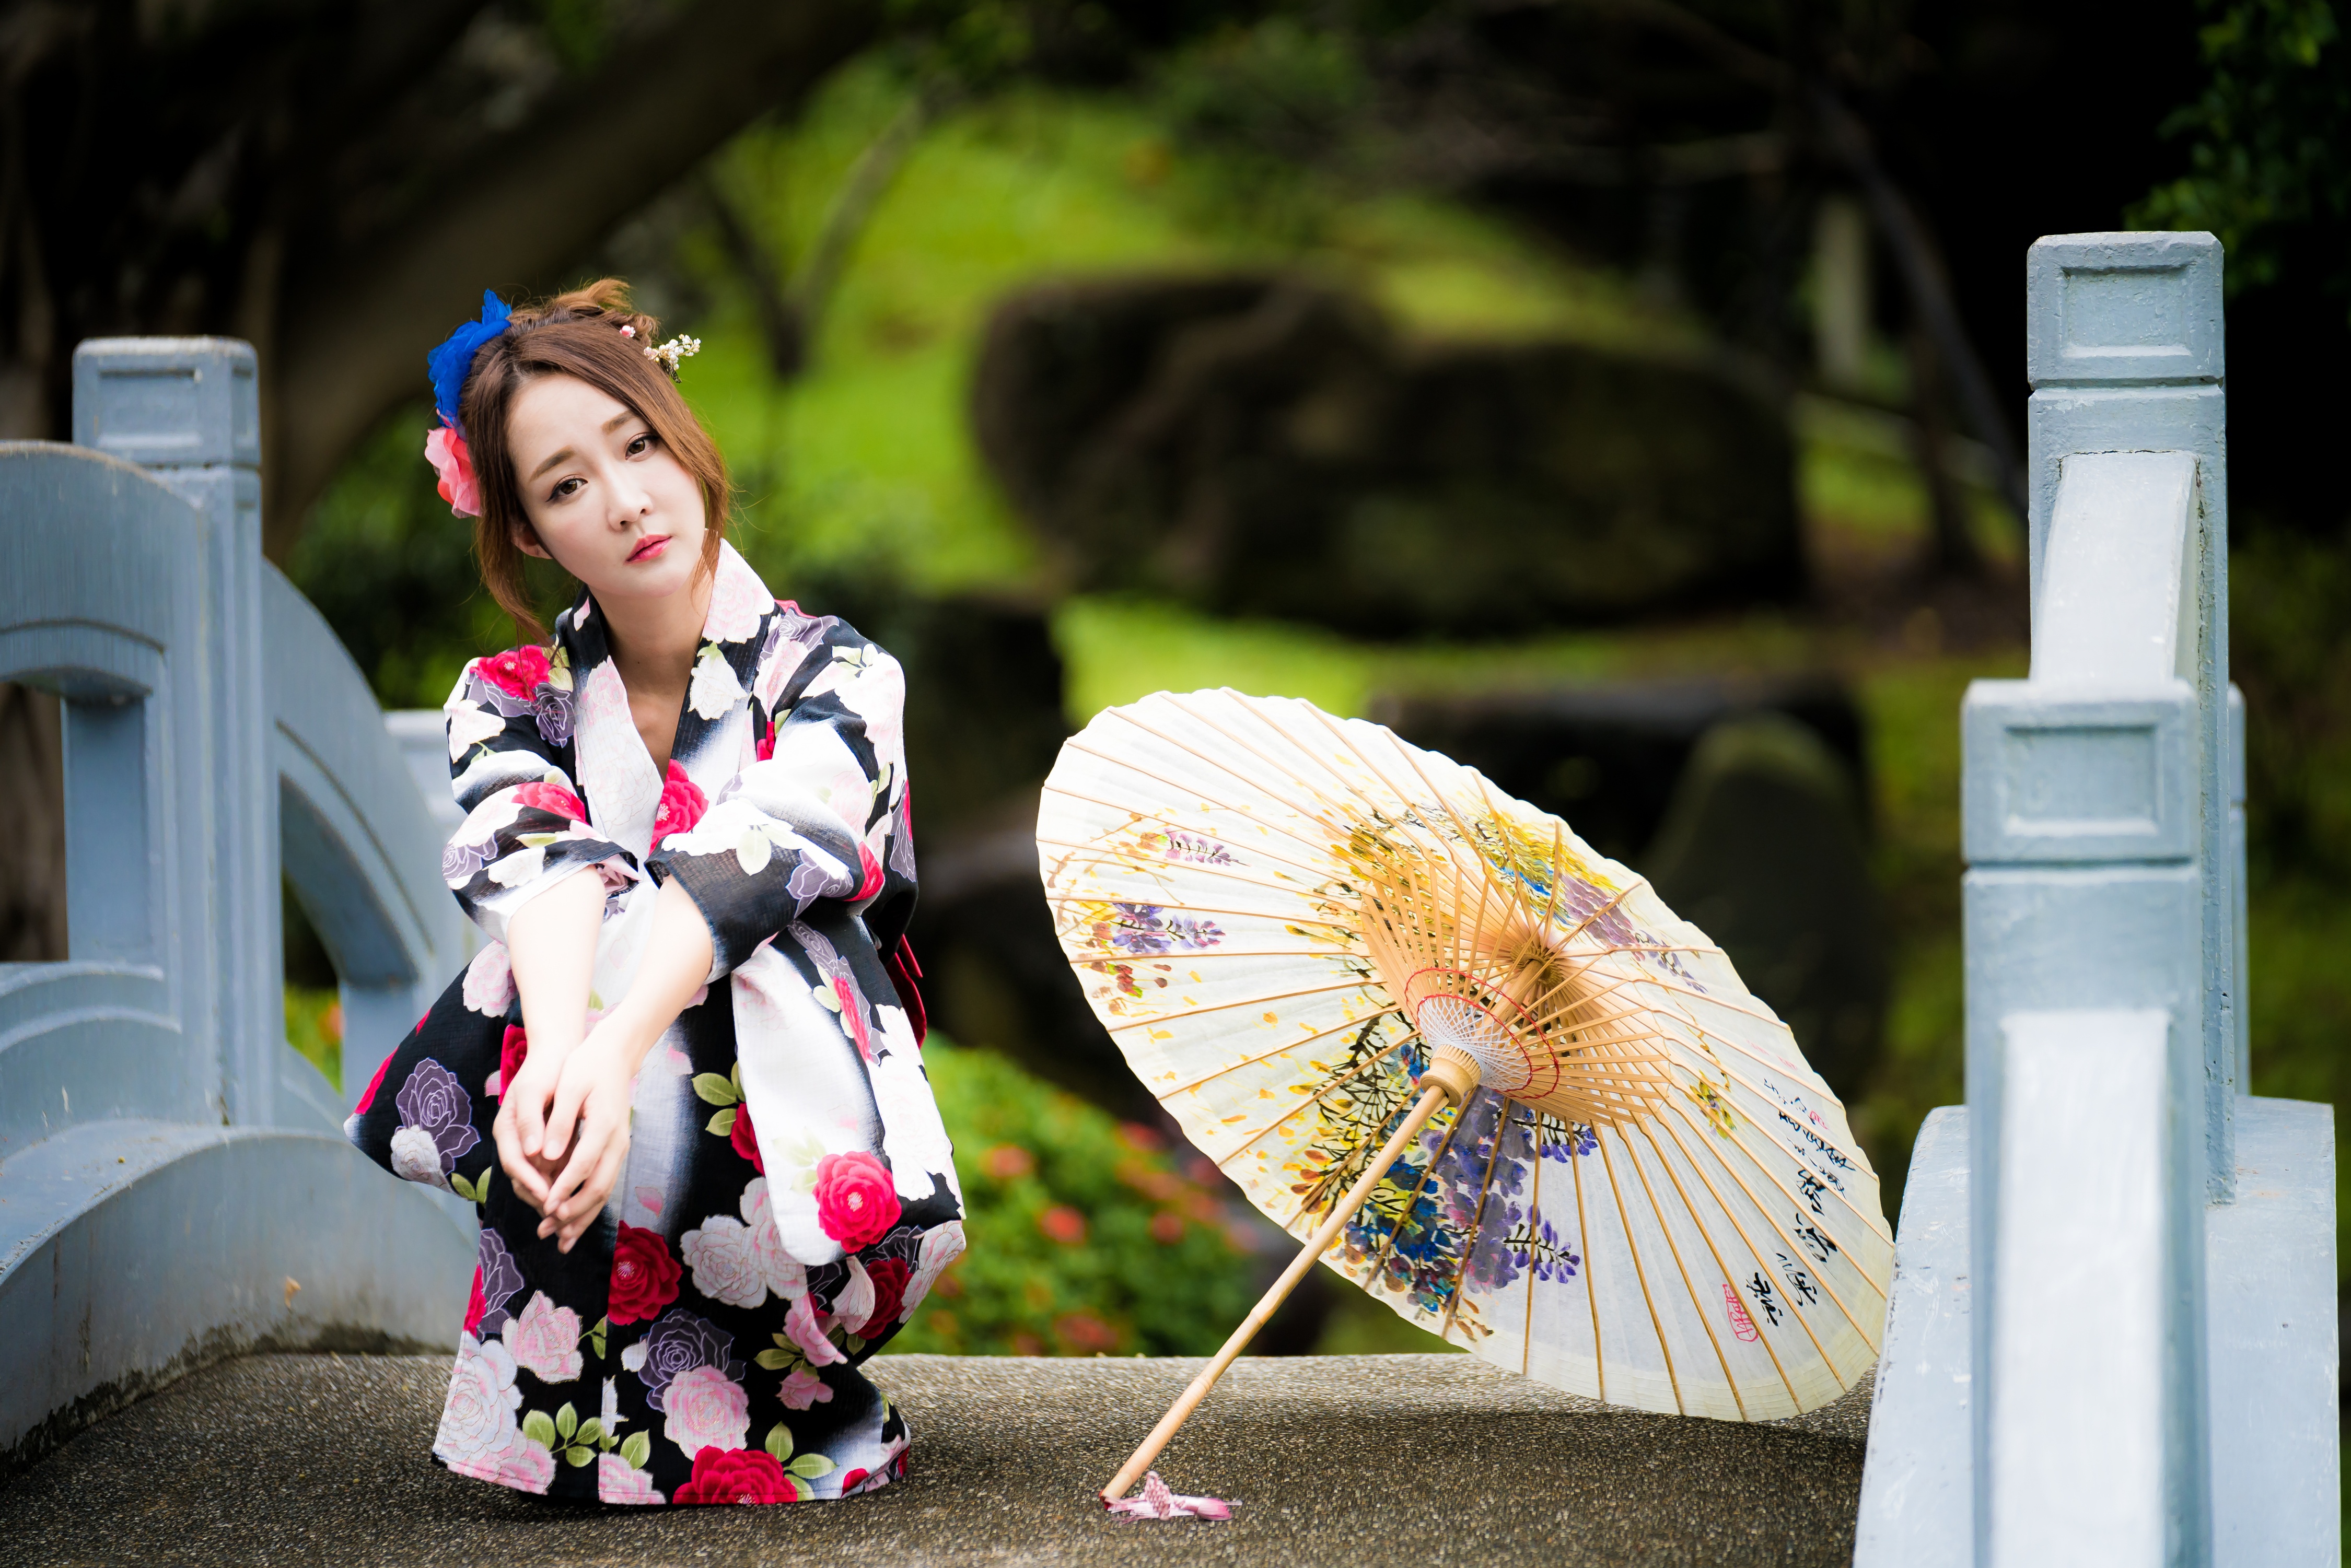 Asian Women Brunette Traditional Clothing Parasol Women Outdoors Flower In Hair Squatting 4500x3002